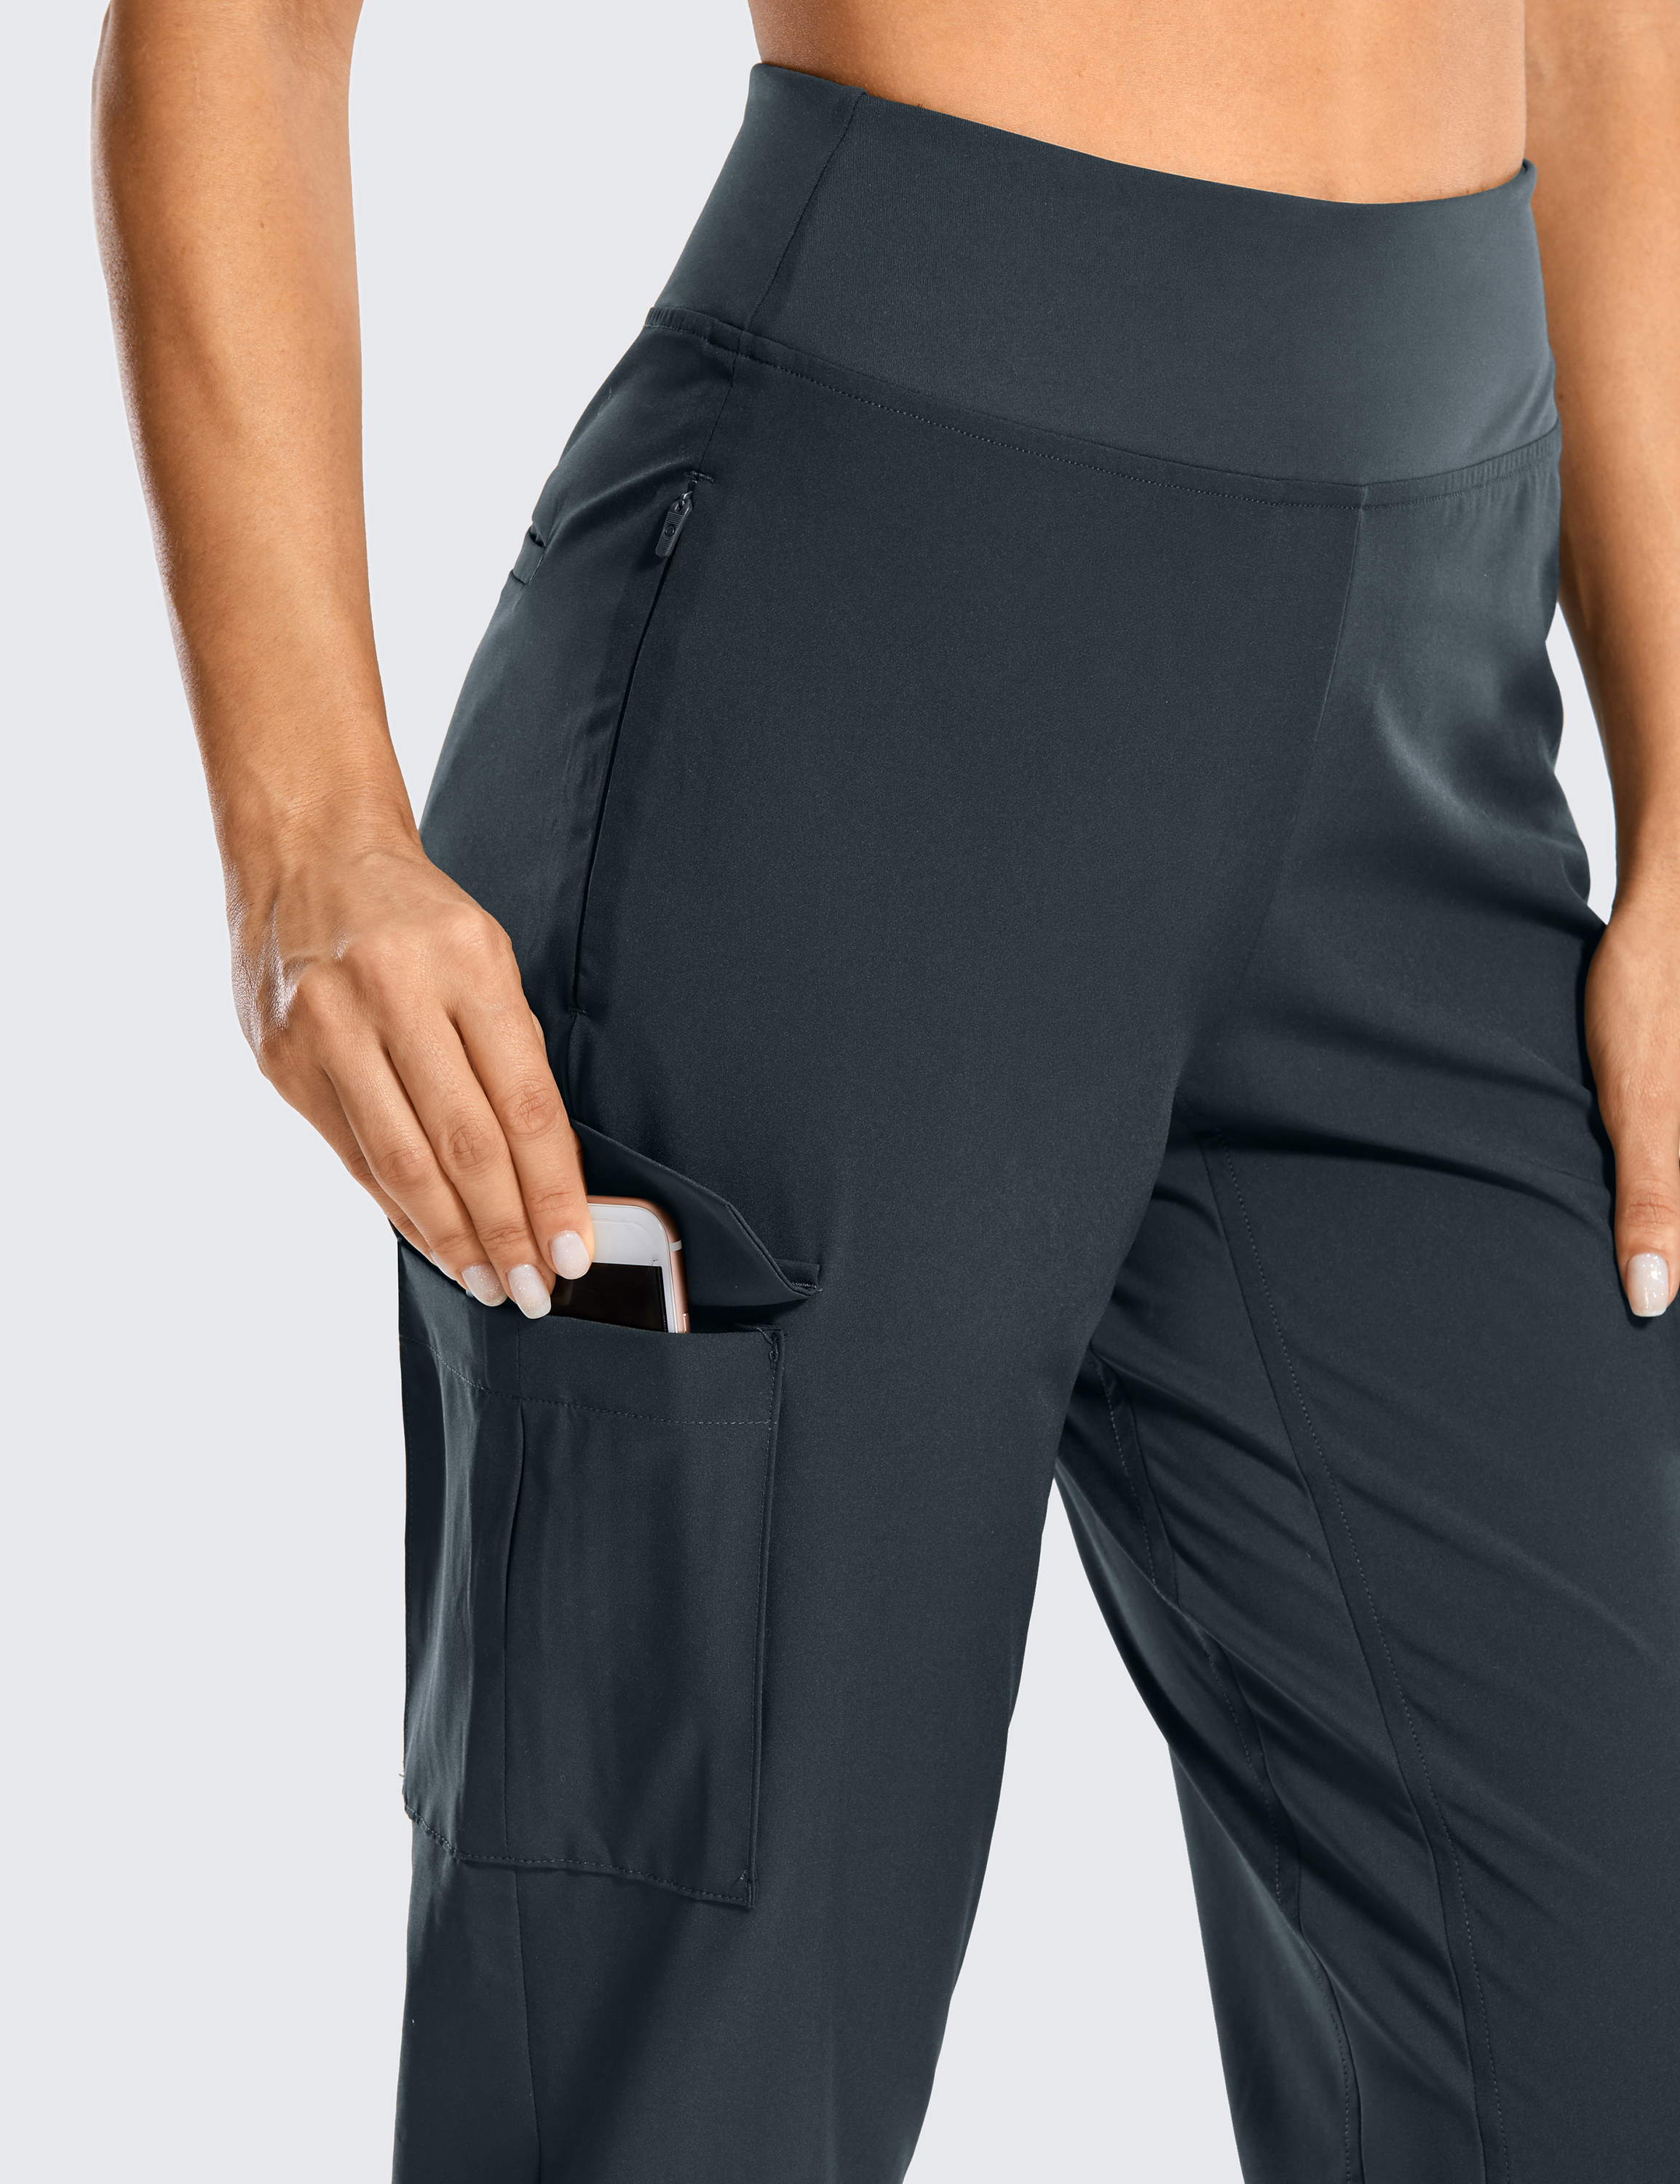 yoga work pants with pockets